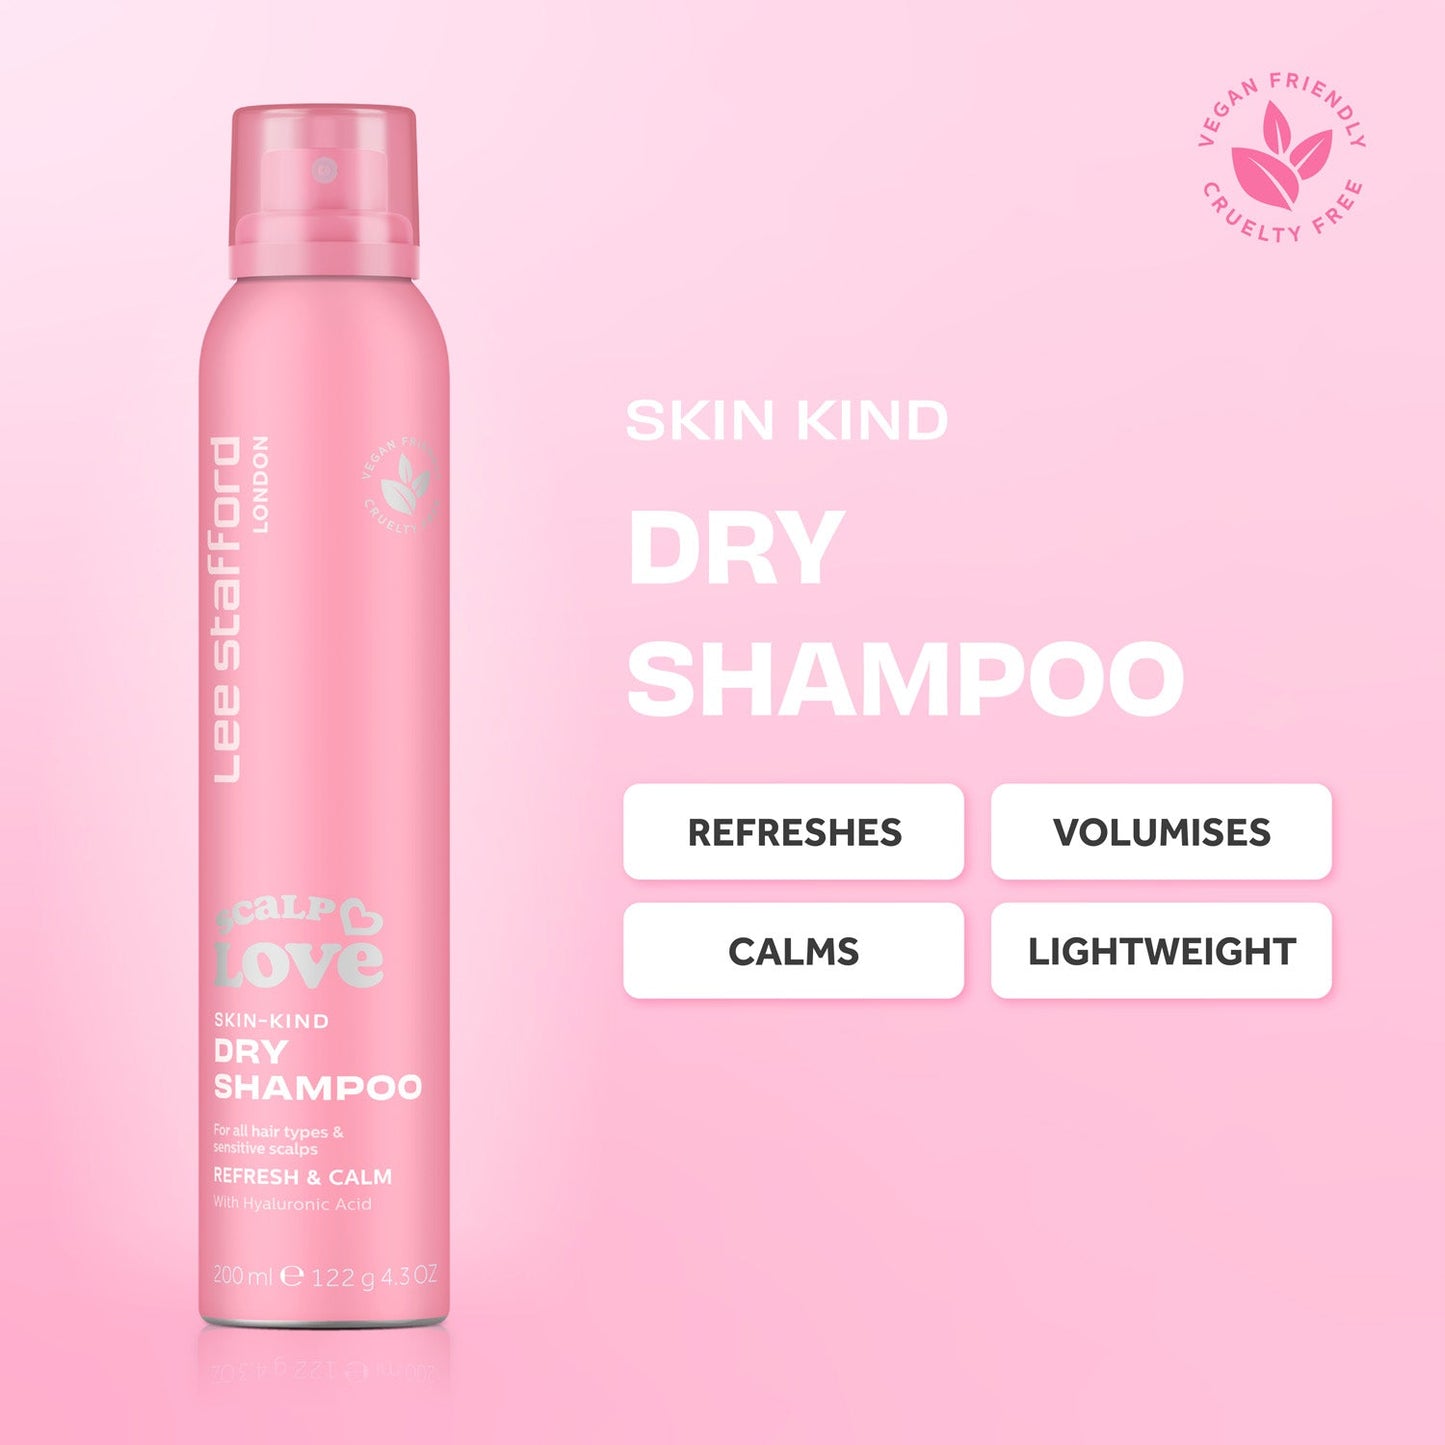 Scalp Love Skin-Kind Dry Shampoo